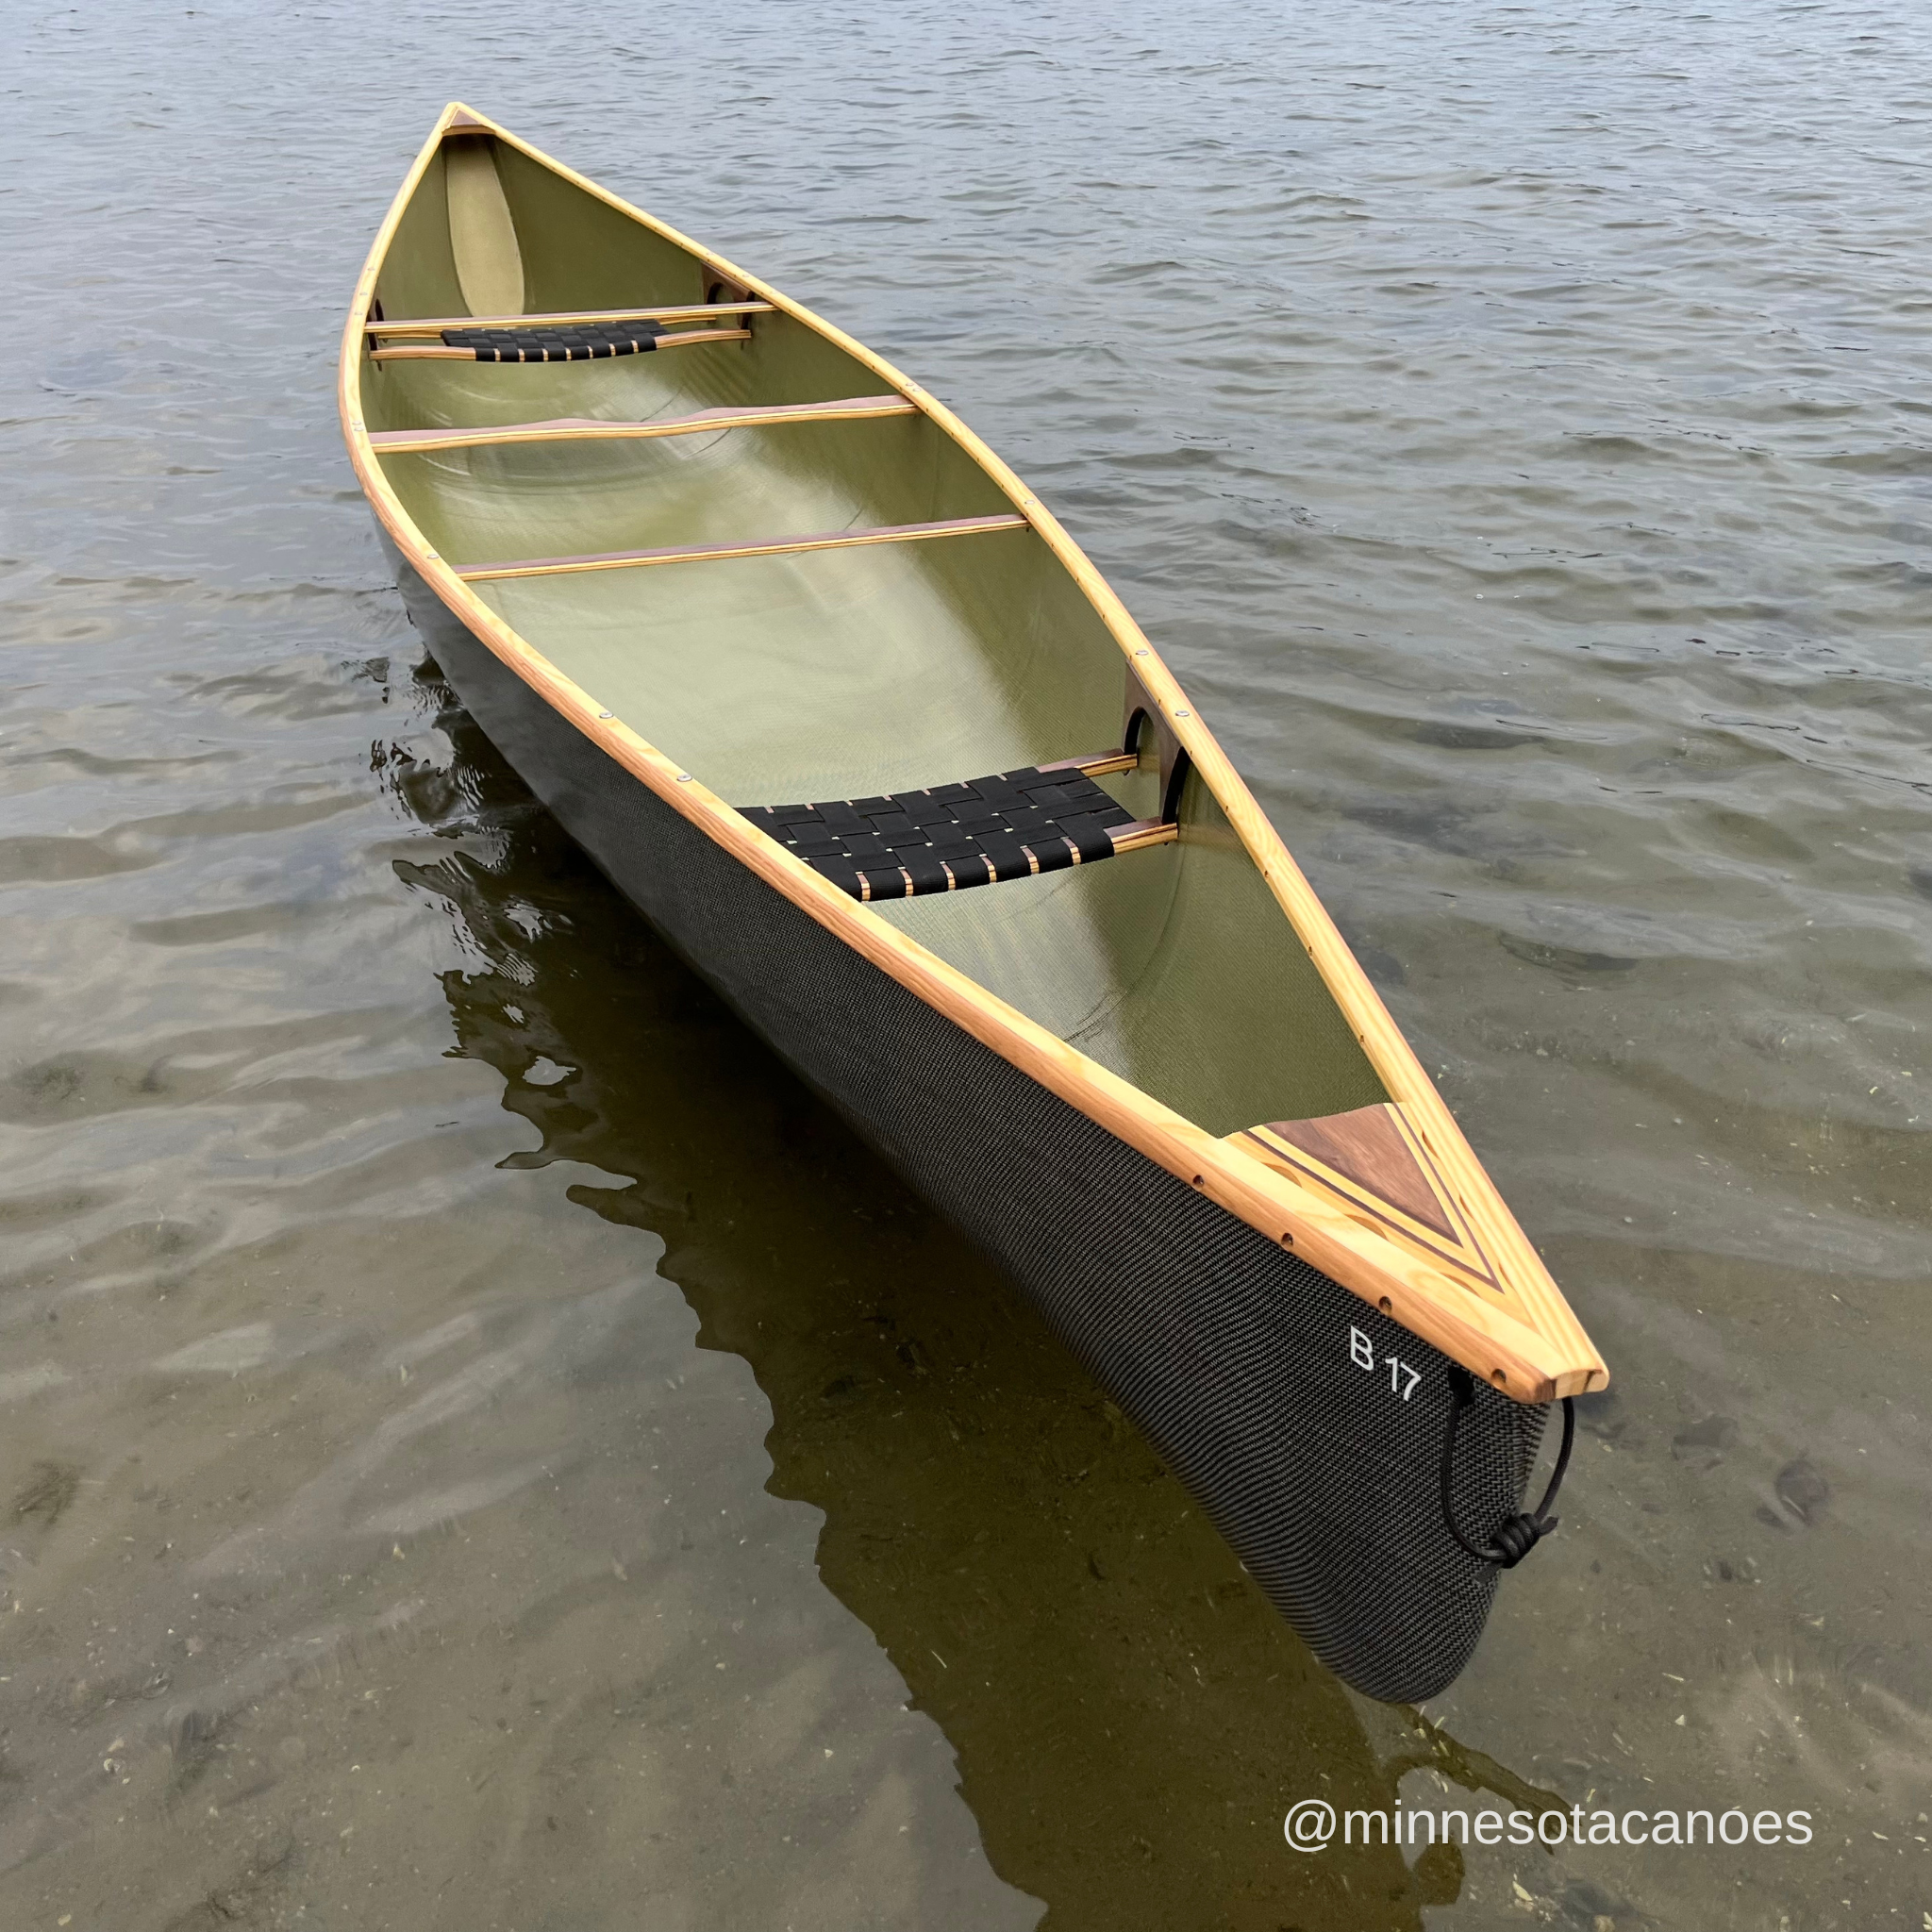 B 17 (17' 0") IXP w/Wood Trim Tandem Northstar Canoe